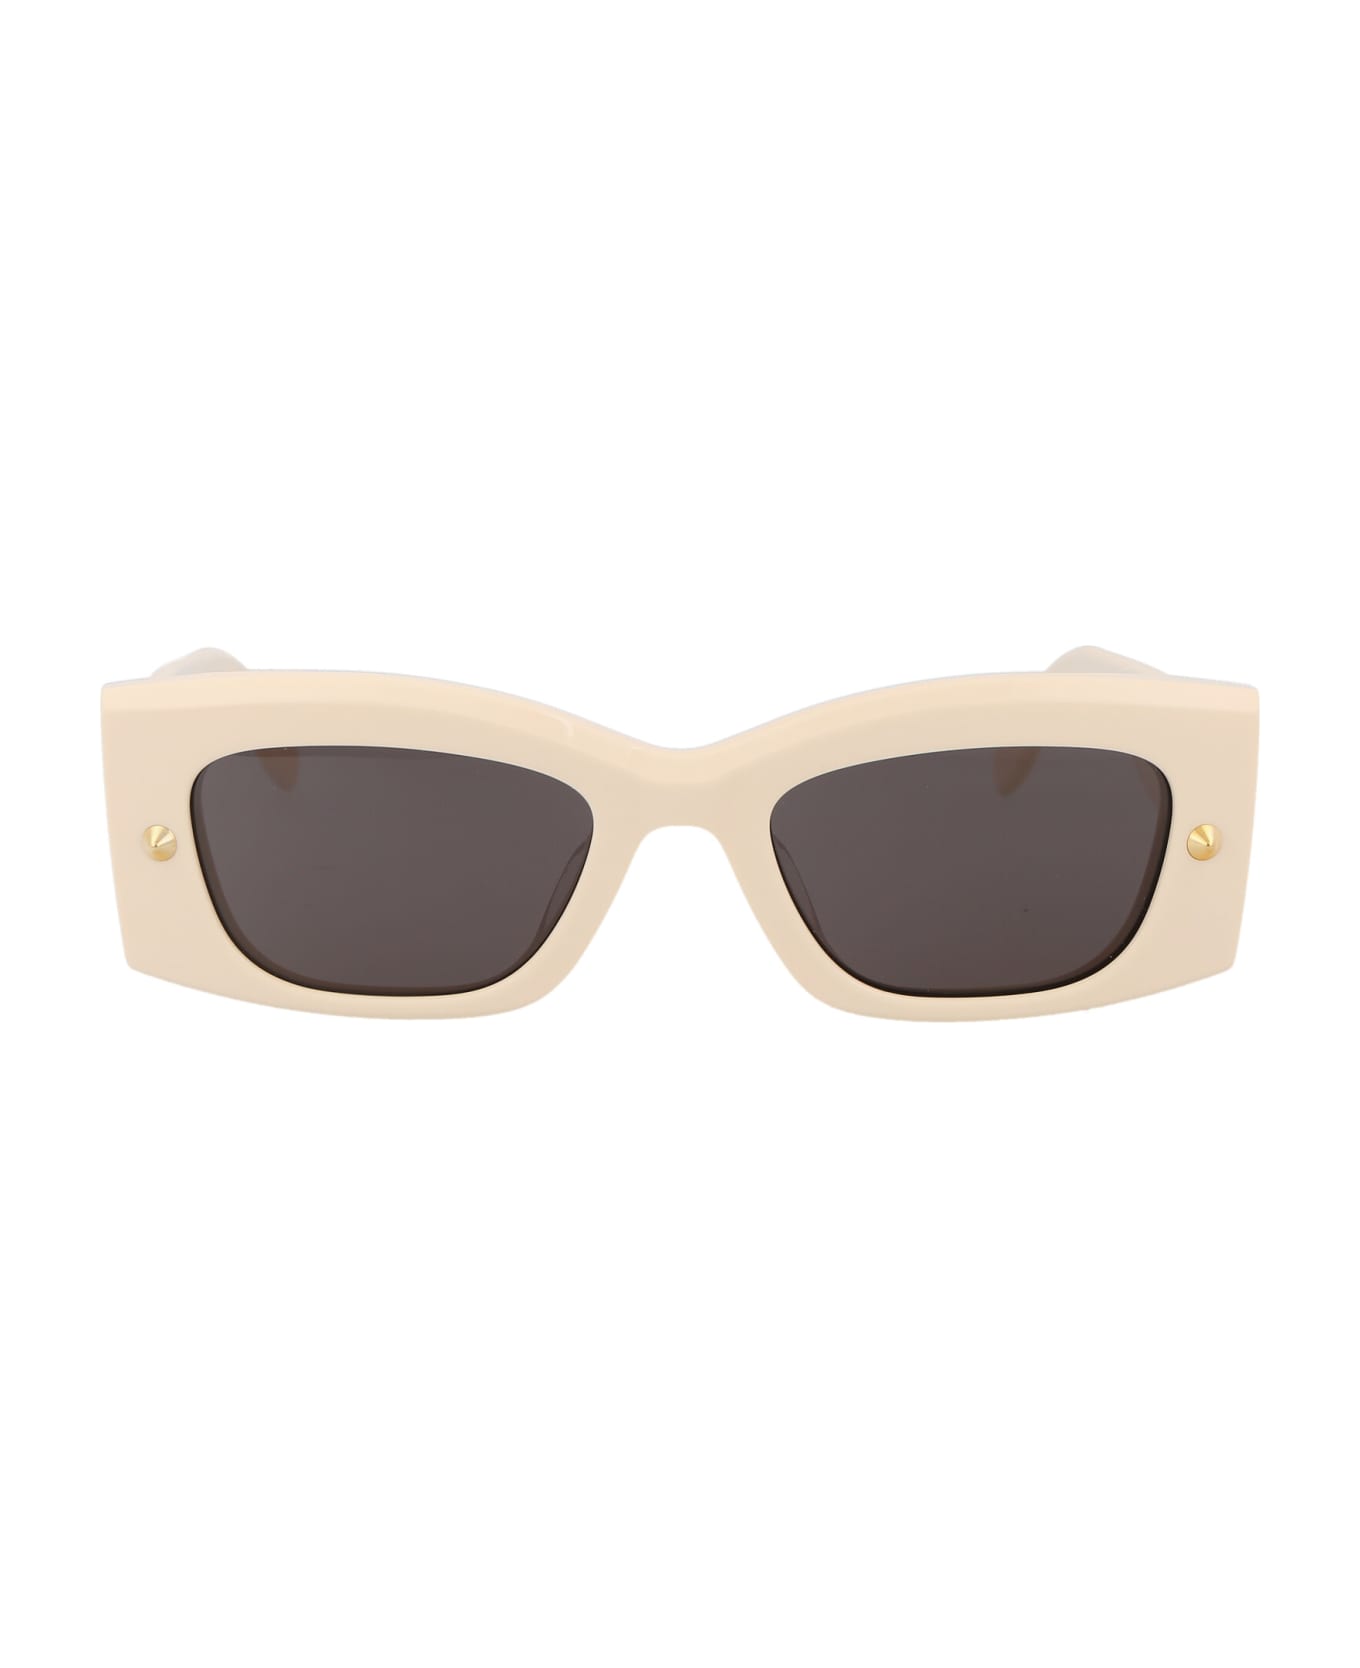 Alexander McQueen Eyewear Am0426s Sunglasses - 005 IVORY IVORY GREY サングラス